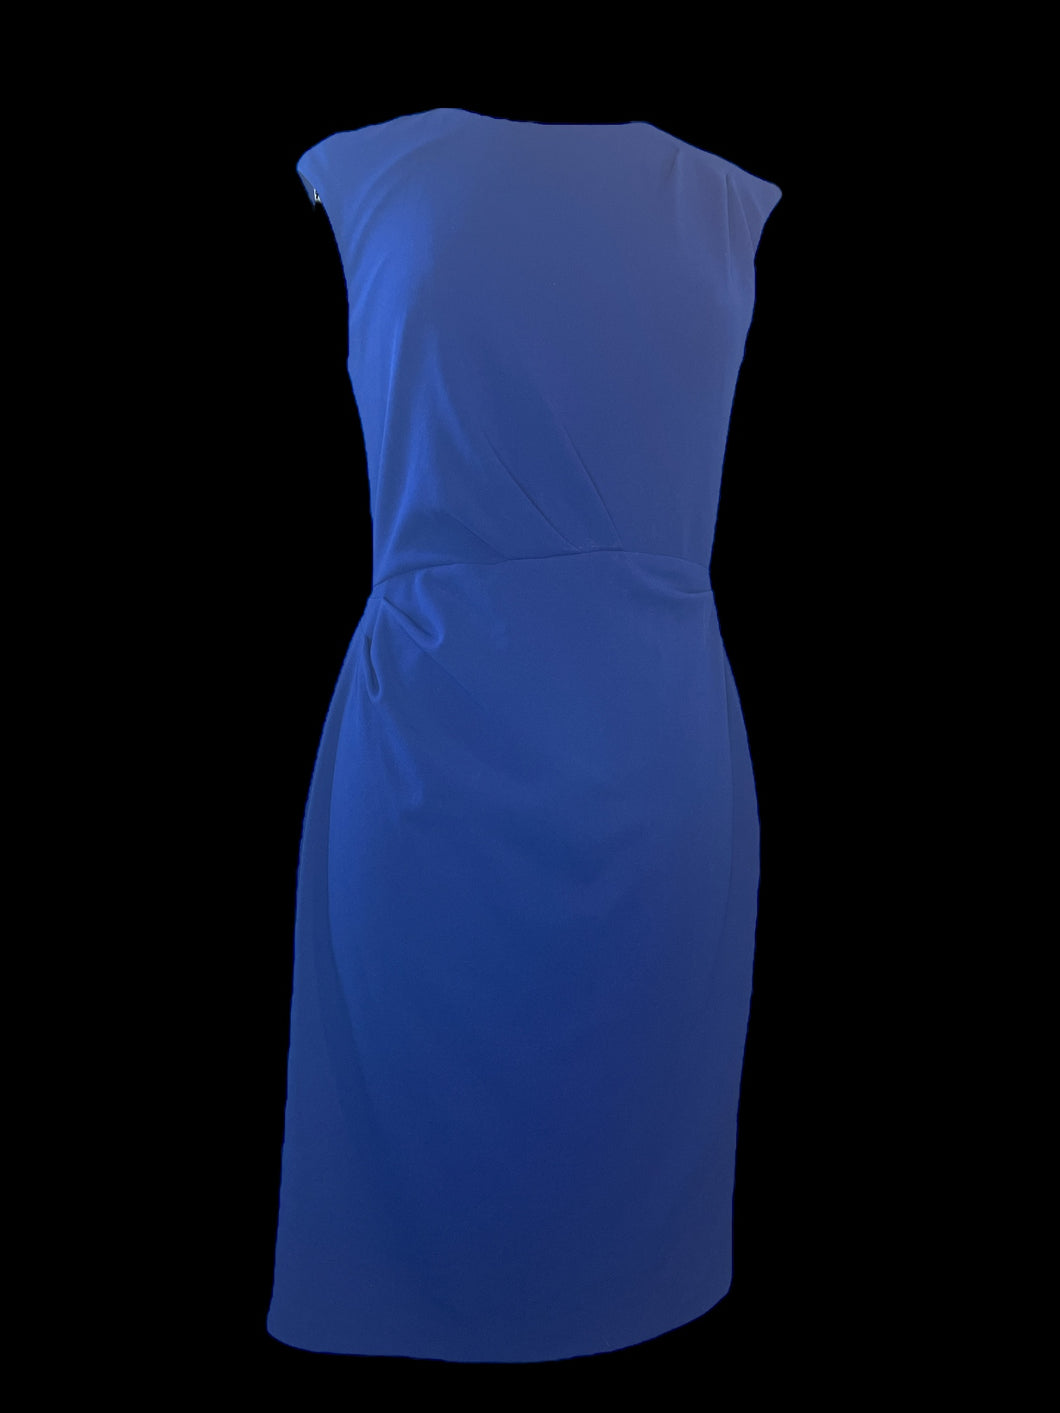 M Cadmium blue boatneck sleevless dress w/ darted side & shoulder, matching lining, & back zipper closure